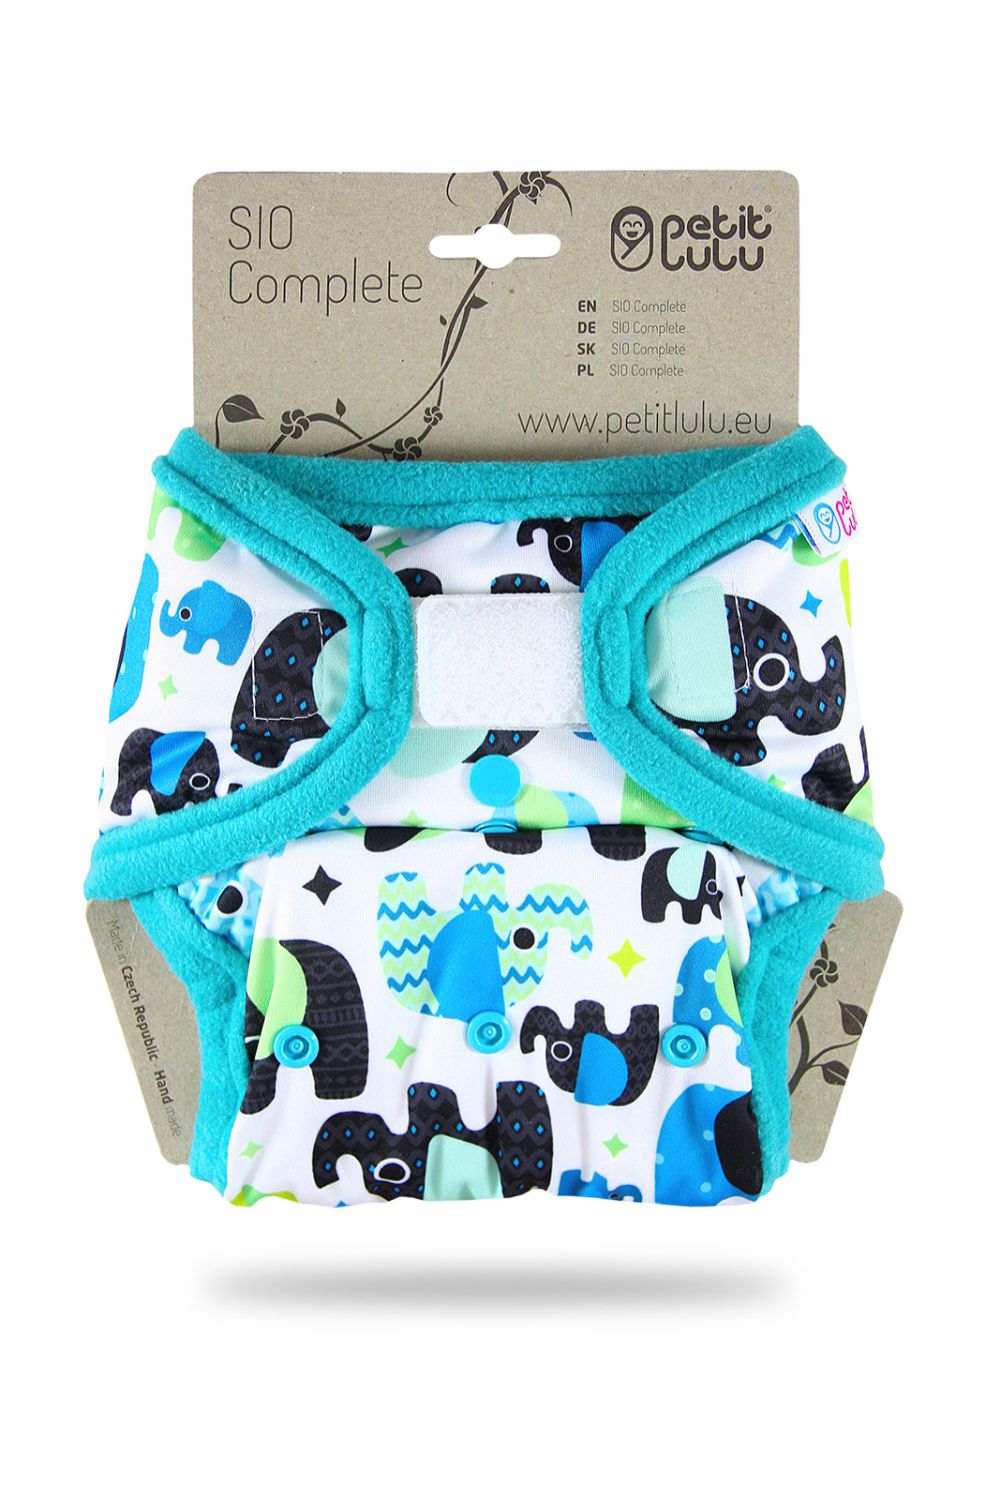 Petit Lulu One Size SIO Complete with Inserts (Hook & Loop) Petit Lulu pattern: Baby Elephant (blue)